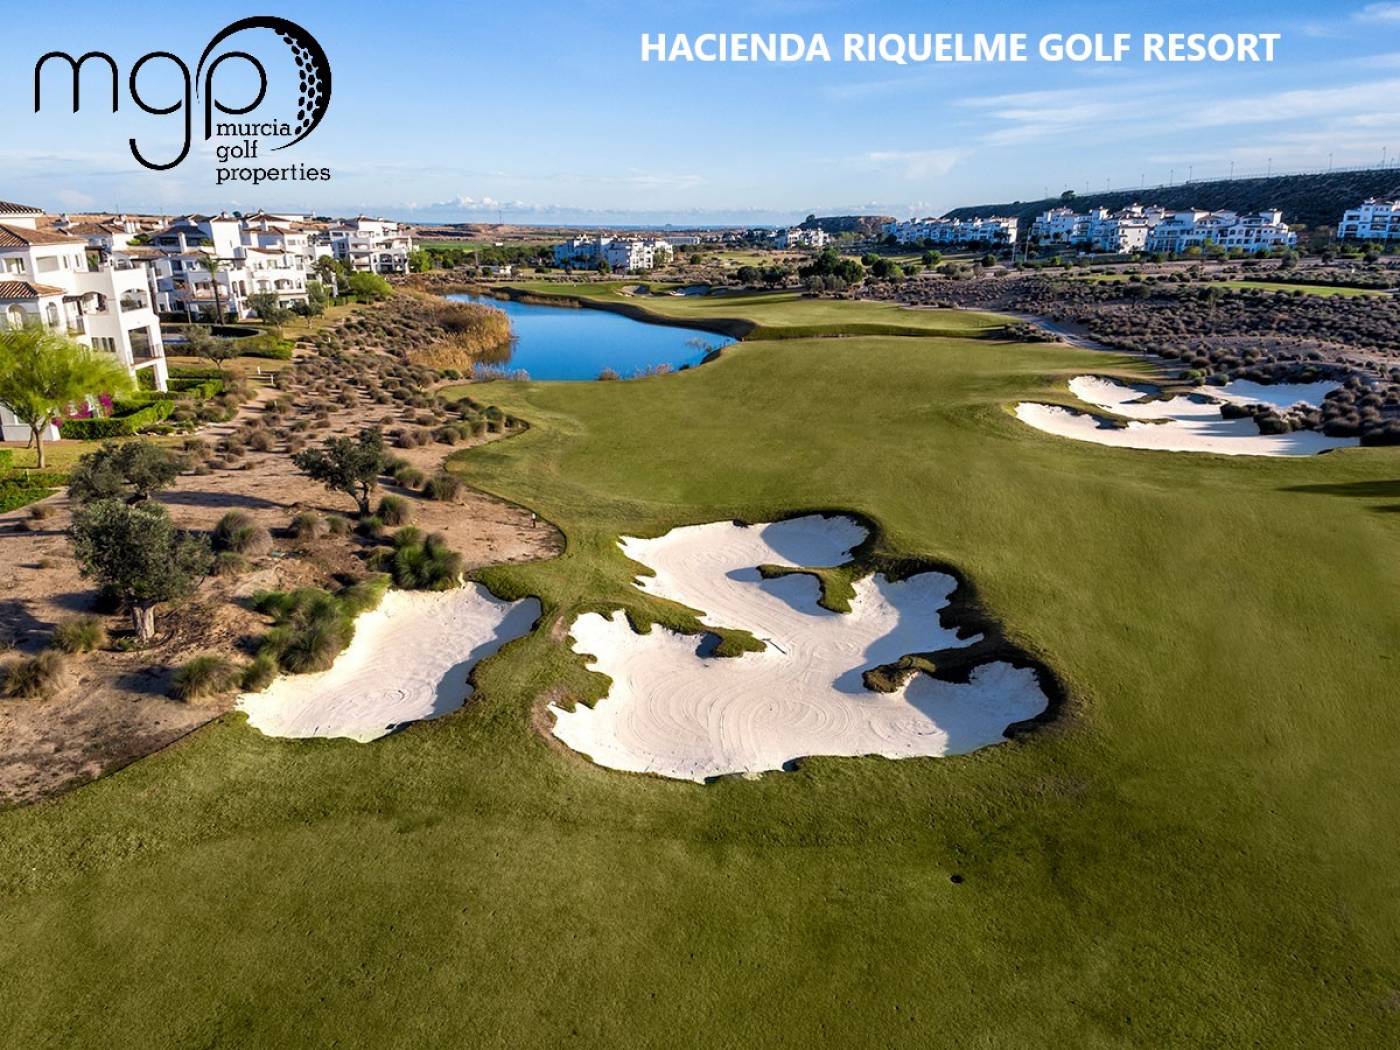 MGP - Golf & Coastal Properties award-winning specialist estate agent in the Murcia Region